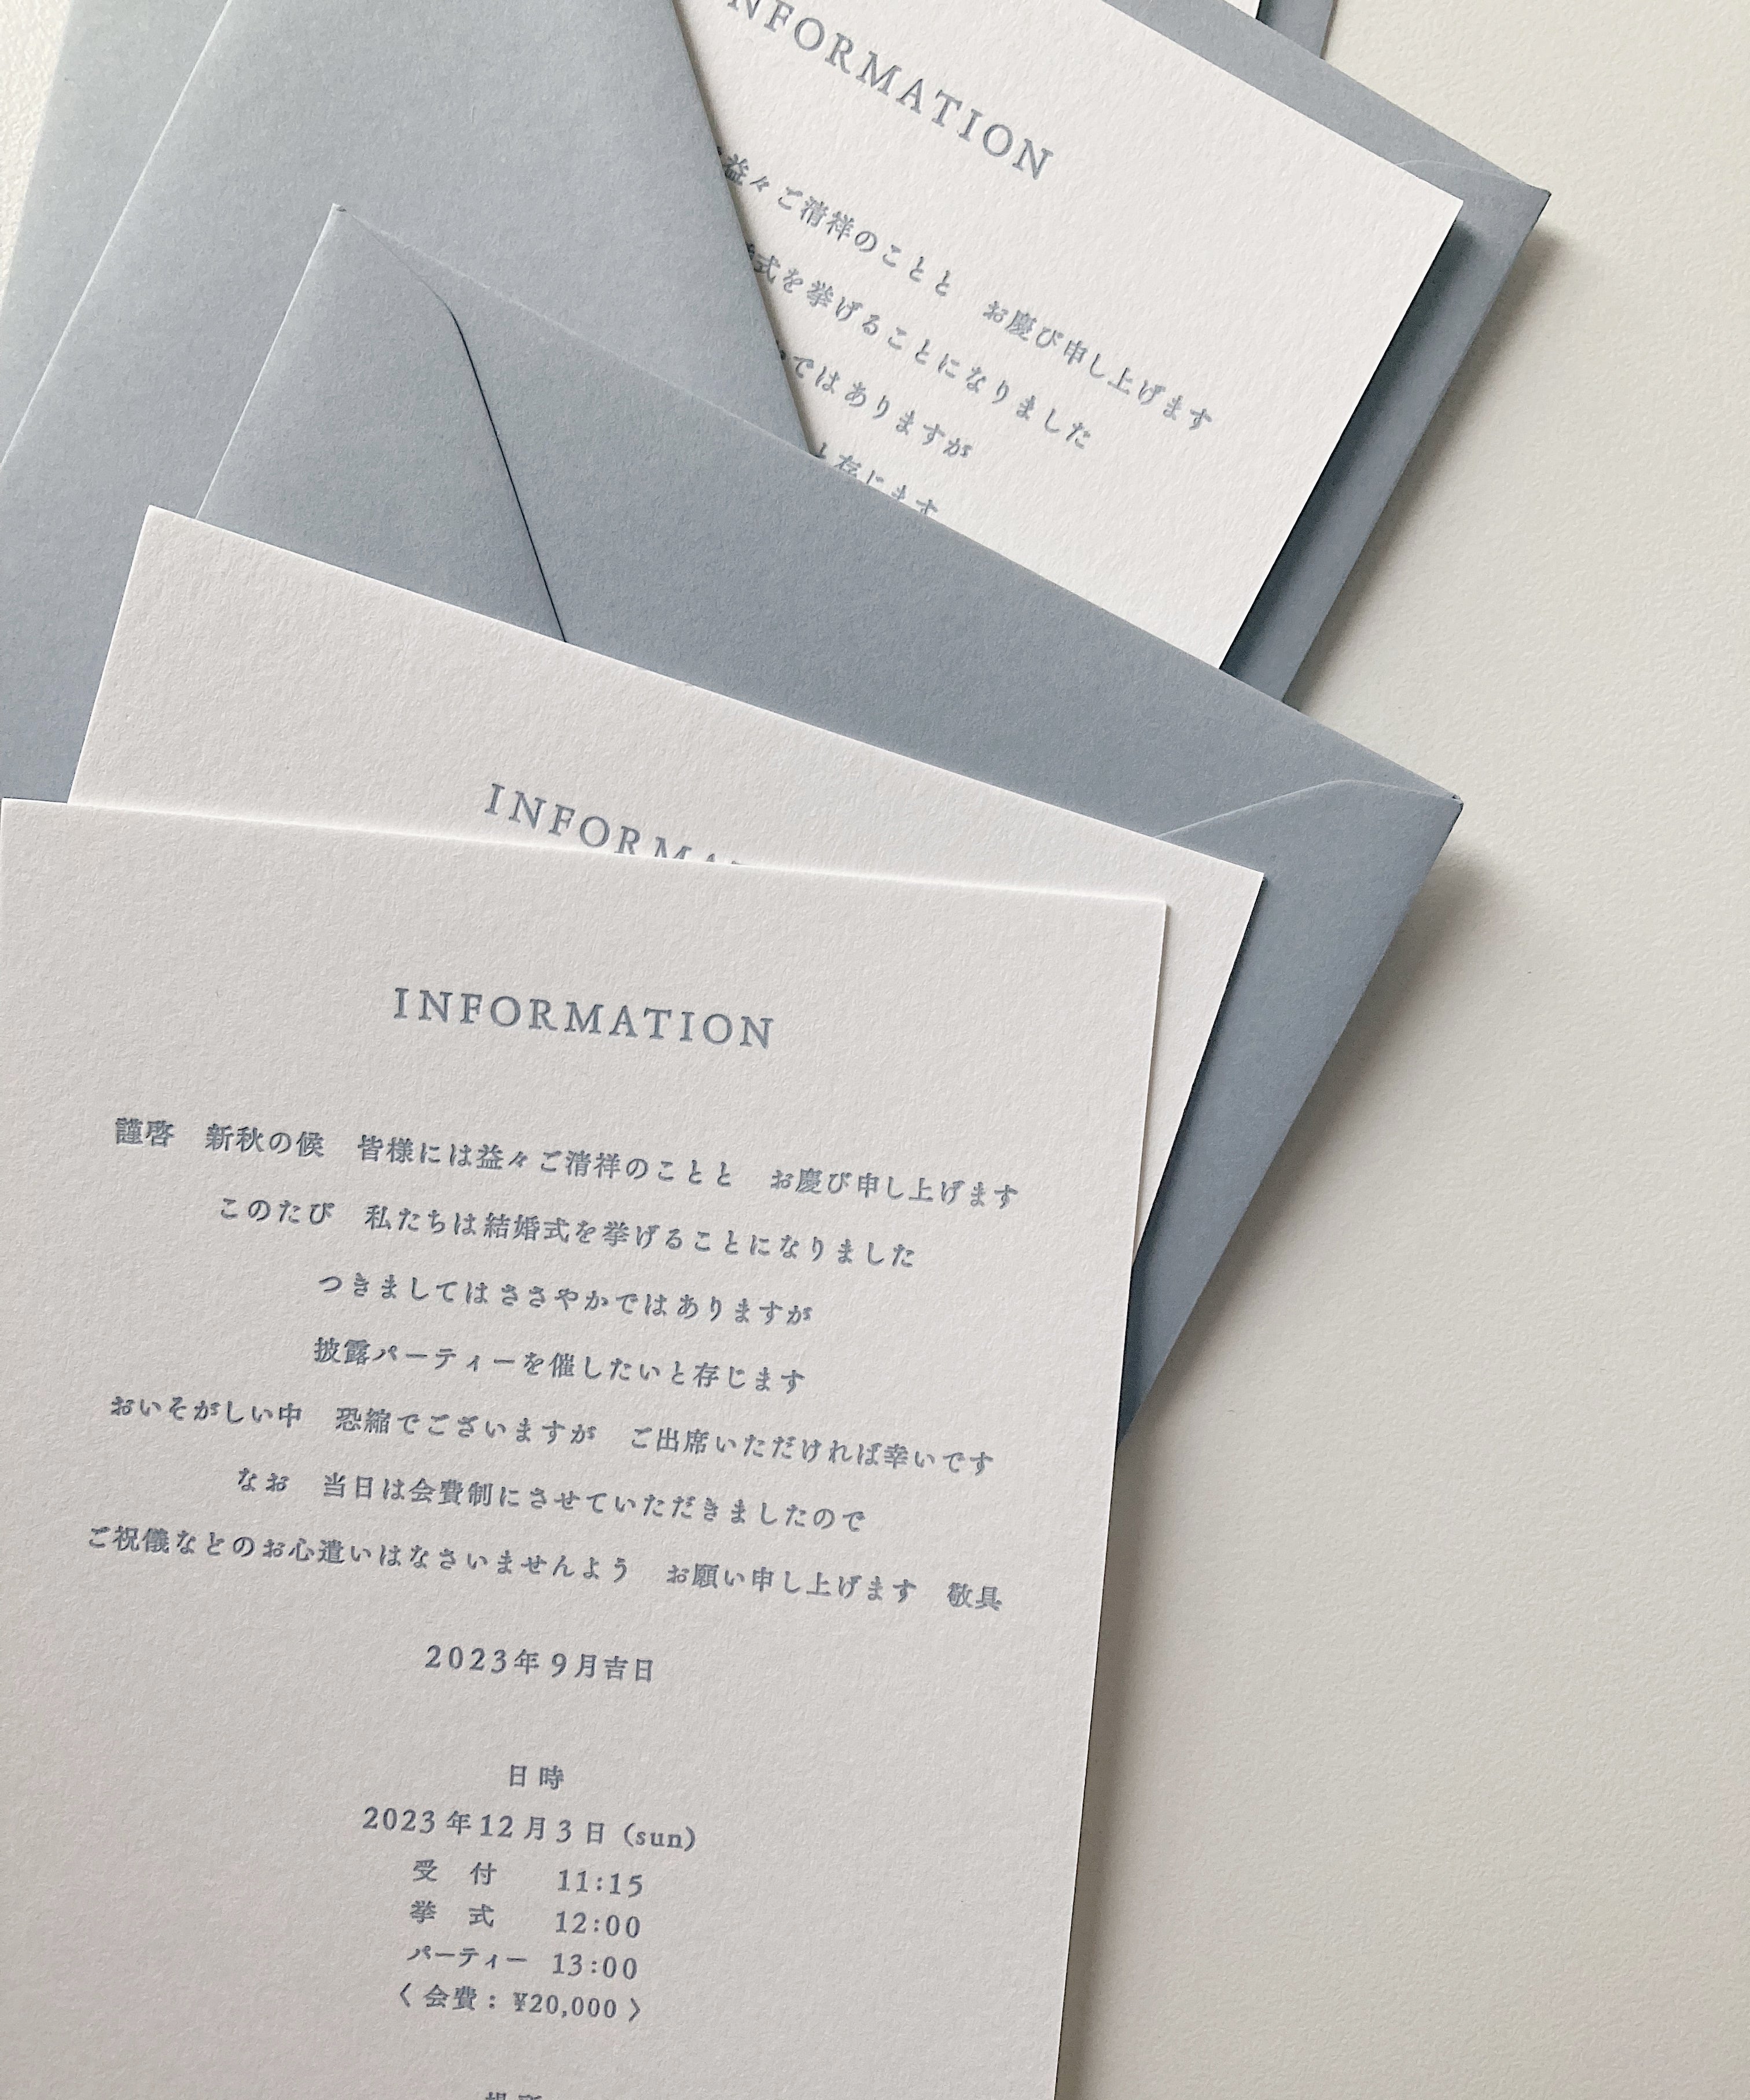 Invitation Set / 招待状セット - コットンペーパー / 活版印刷